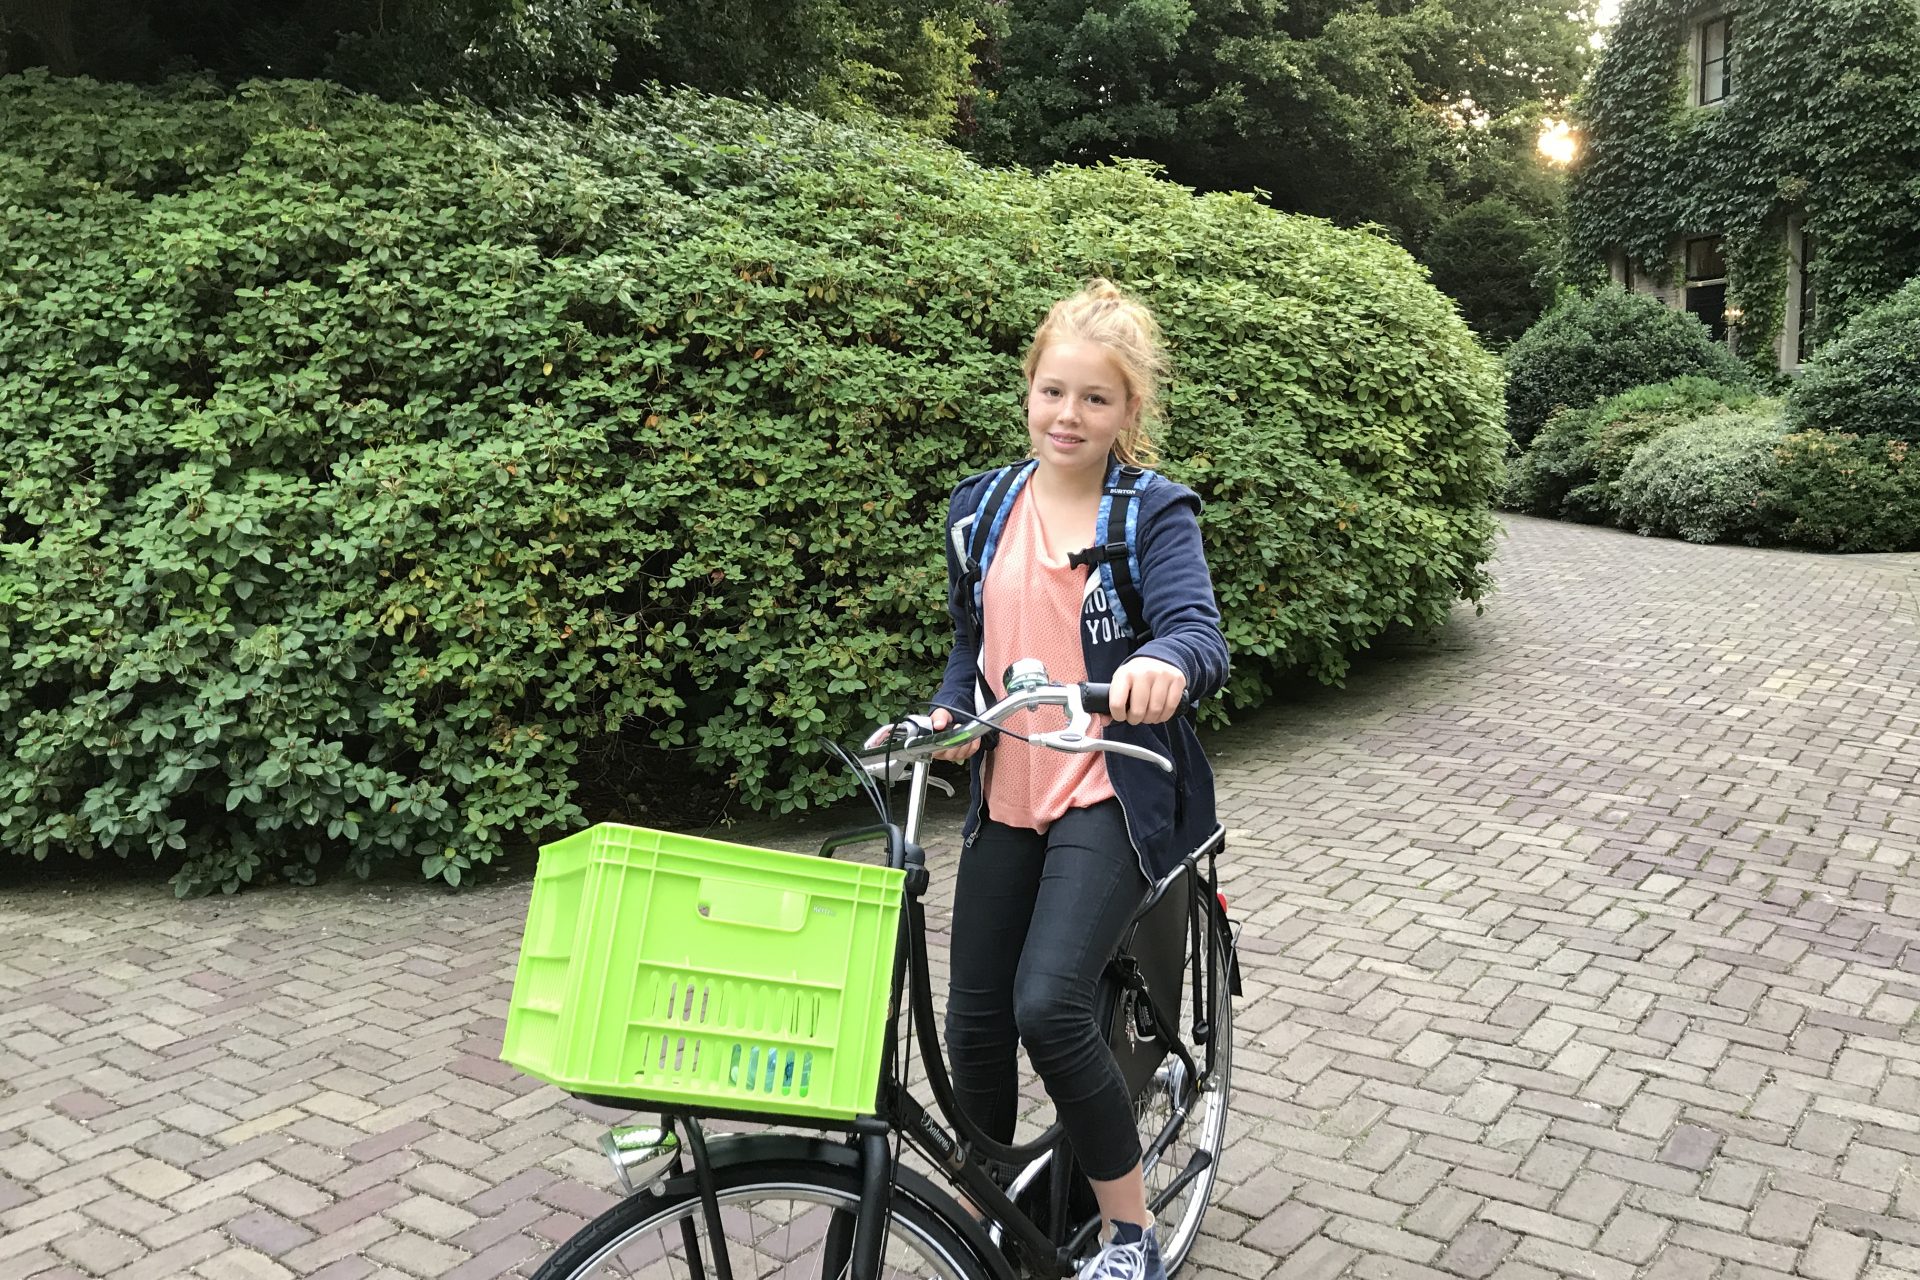 2017: On the bike to school